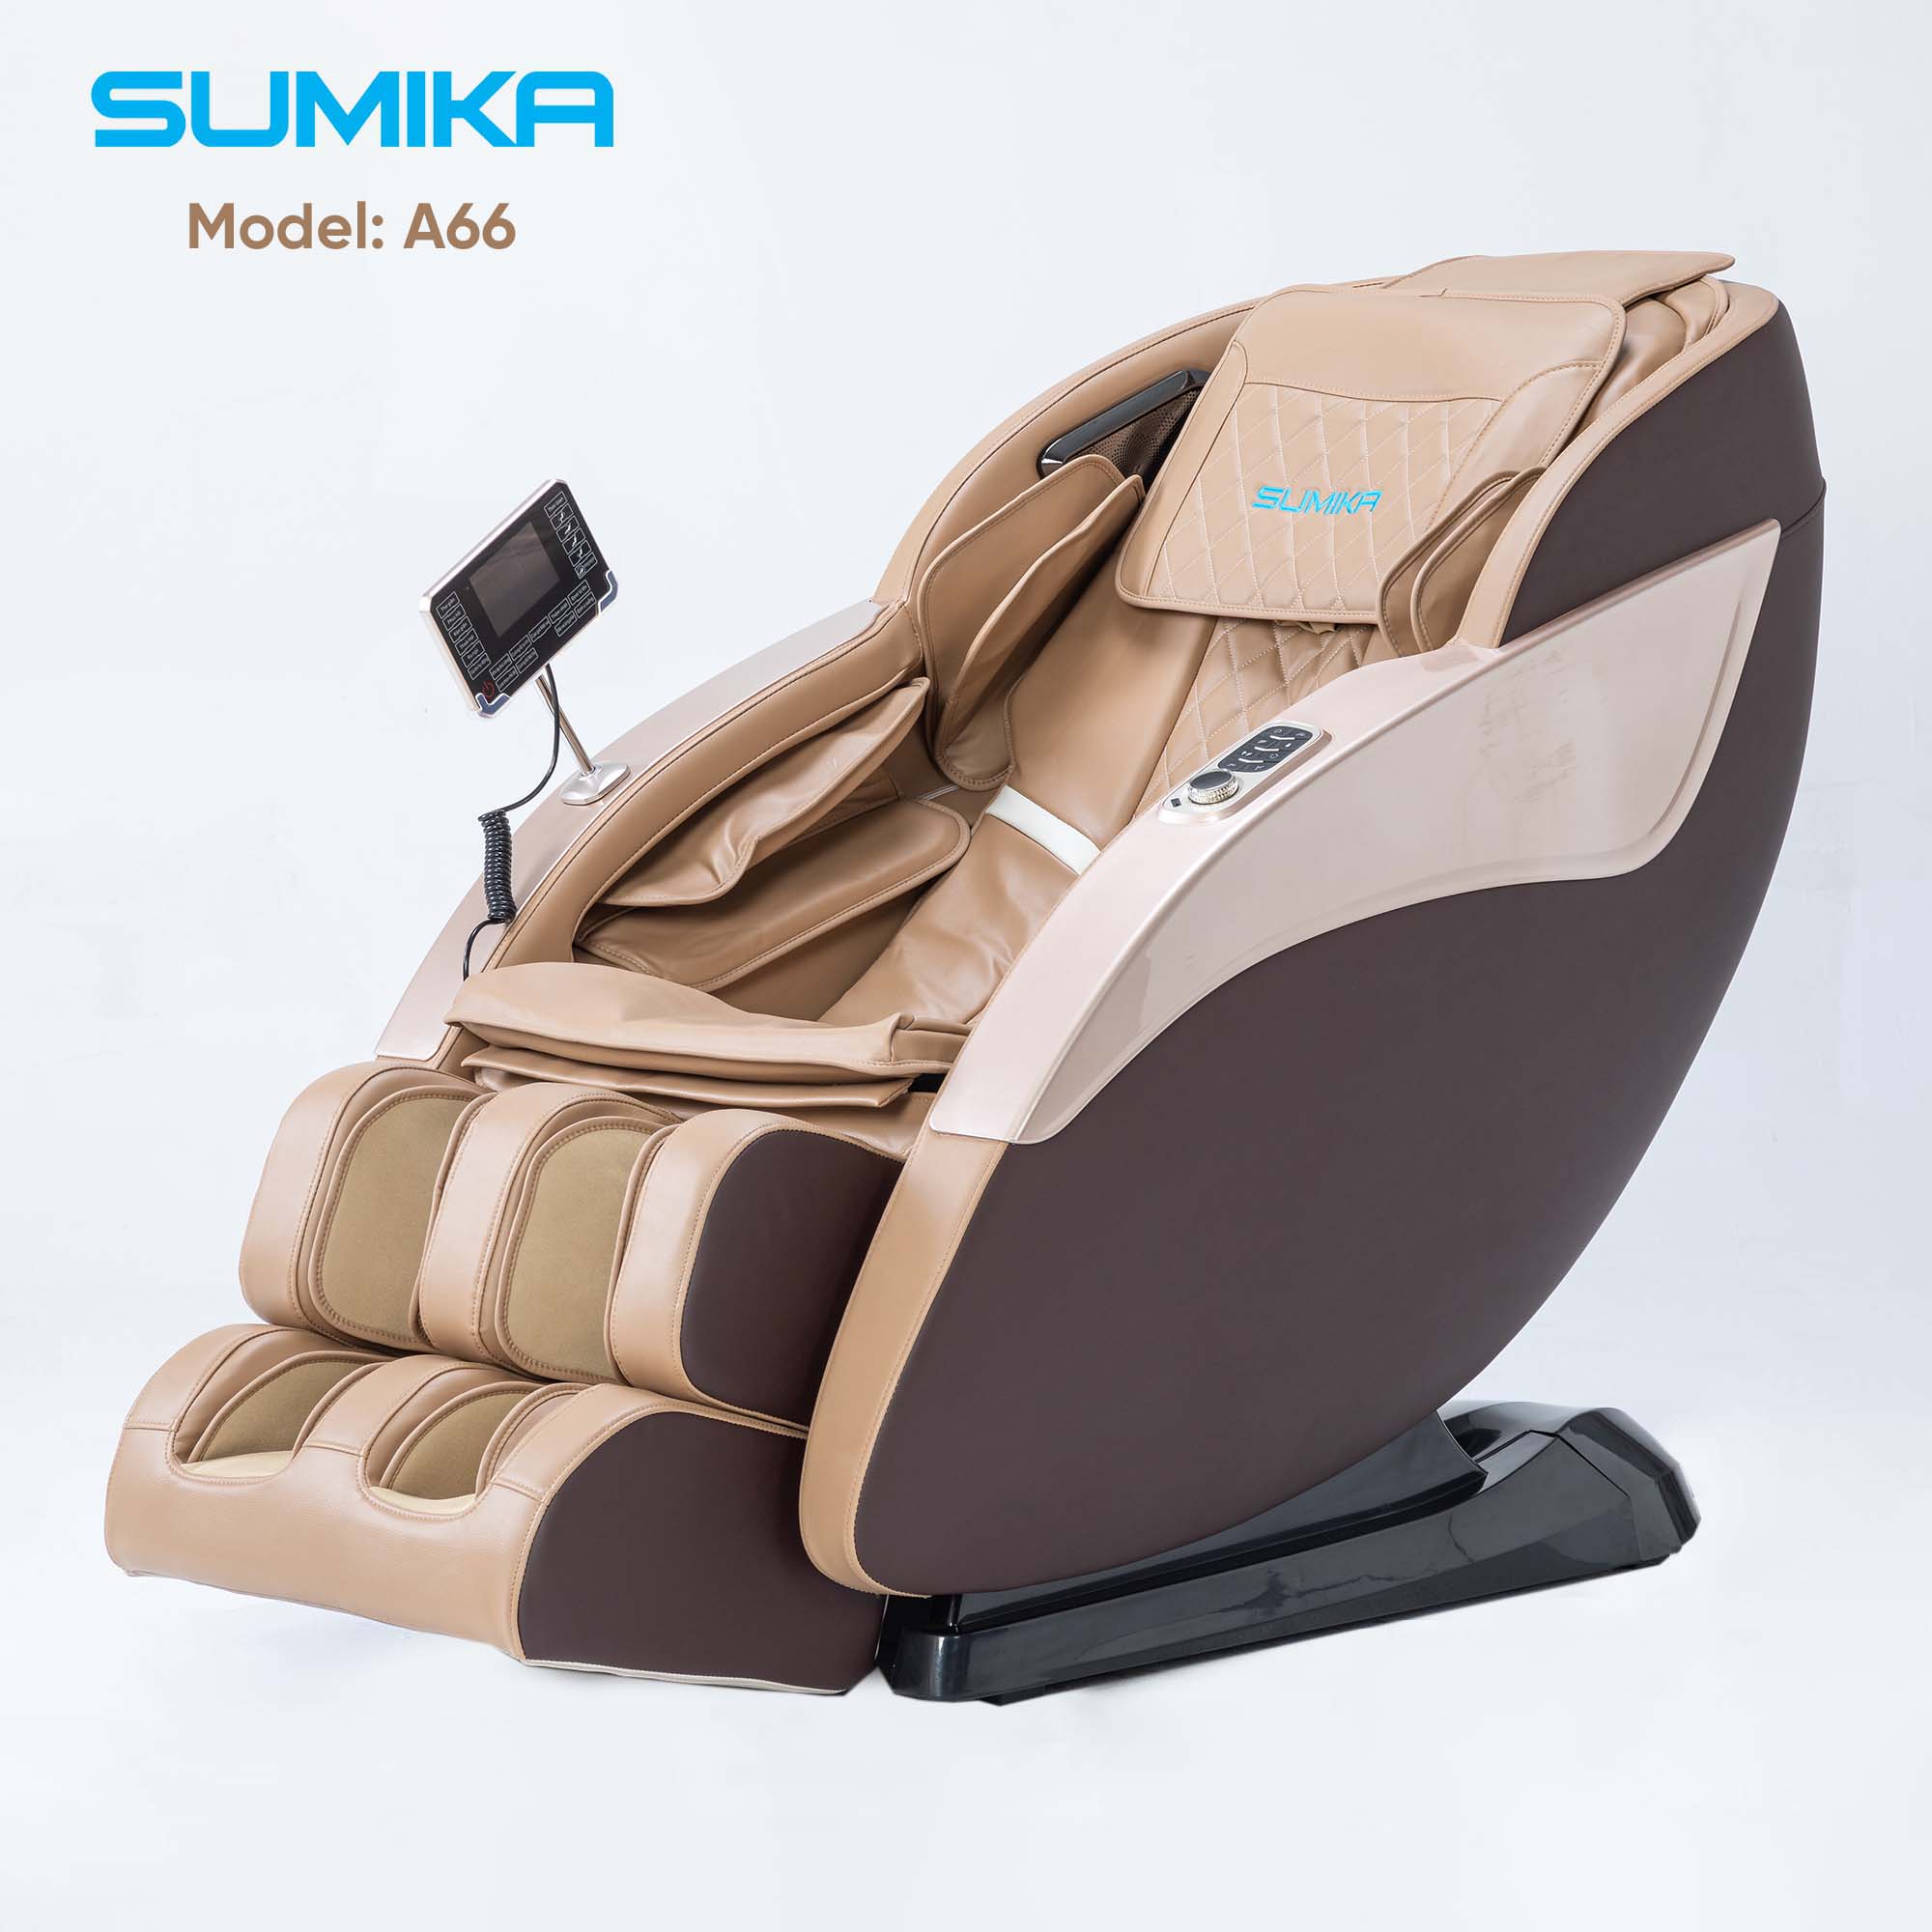 Sumika A66 body massage chair